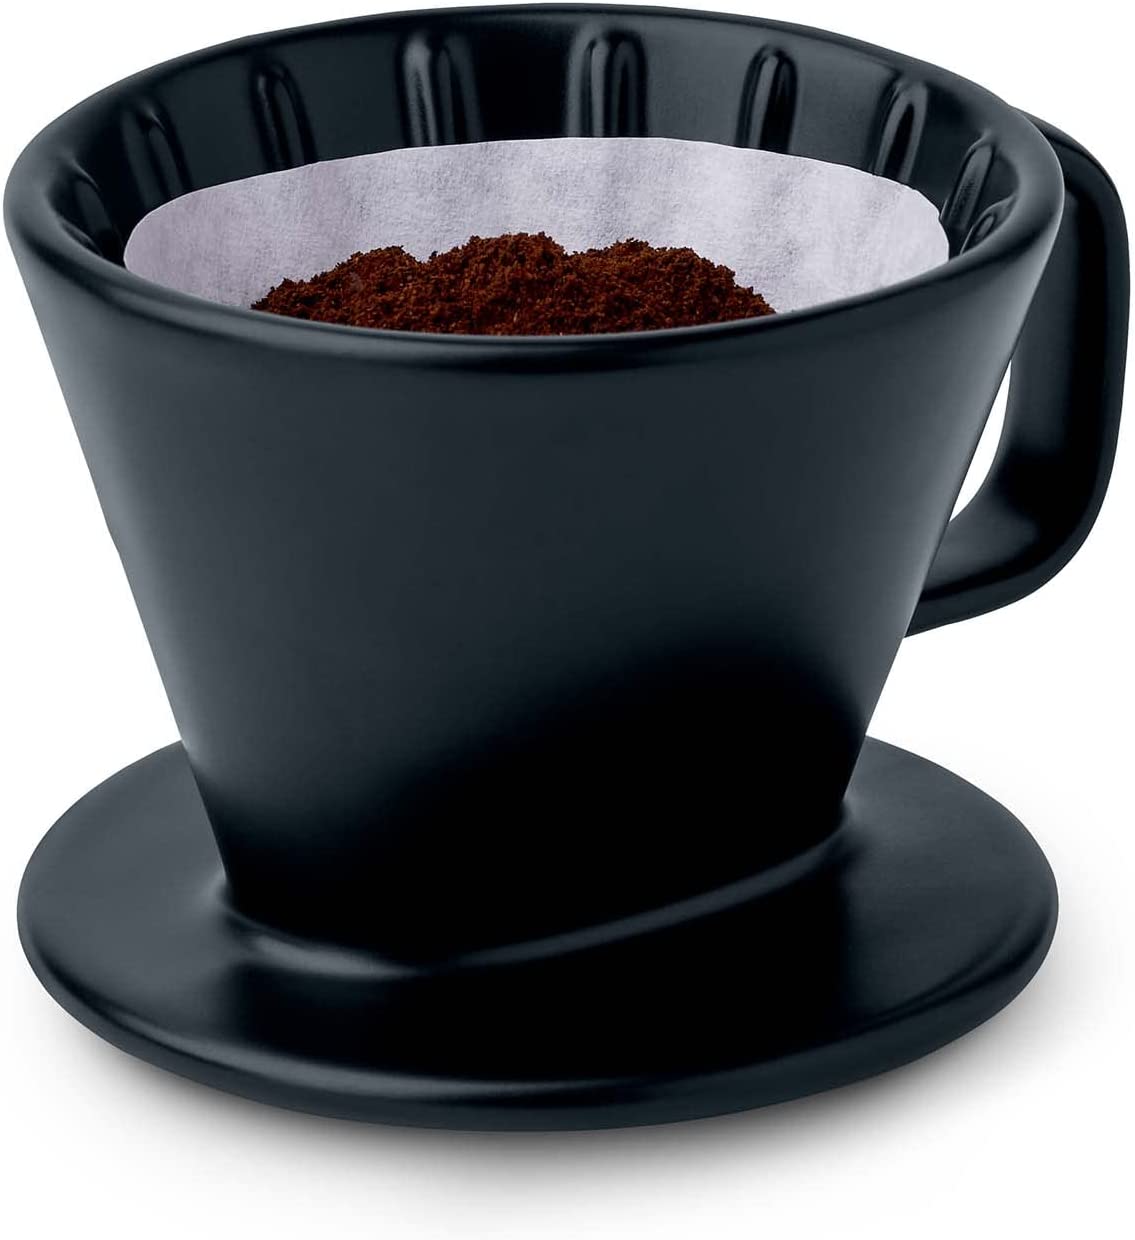 Tchibo Coffee Filter, Hand Filter, Hand Filter, Filter Size 101, Dishwasher Safe, Ceramic, Black